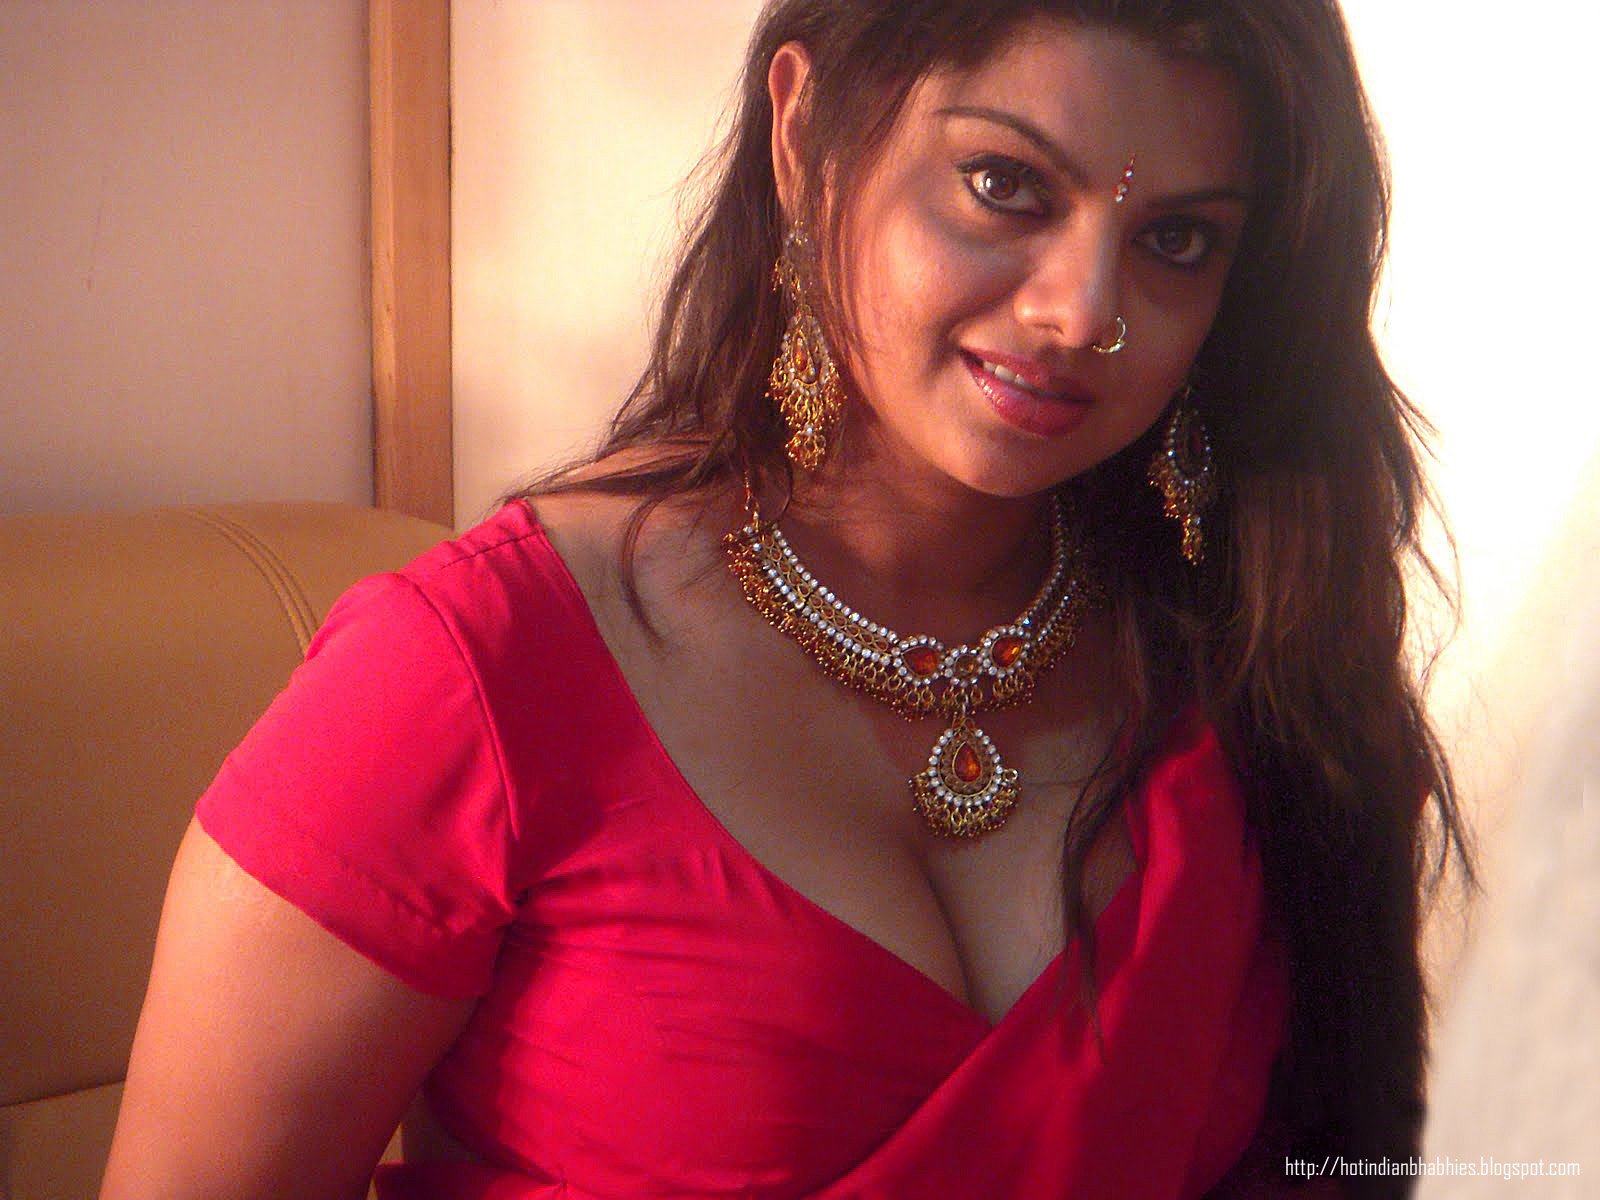 http://4.bp.blogspot.com/-73ASdnUQ2Cs/TZIzFqE93YI/AAAAAAAAH2c/idKu_fOfbzA/s1600/1-Swathi-Varma-Hot-Photo-gallery-arabic-tamil-indian-sexy-babes-house-wife-sex-pictures-bed-room-pictures-nude-pisture-sari-pictures-big-boobs-tits-pictures-indian-tamil-big-ass-hot-bikini.jpg?huge%20bbw%20boobs